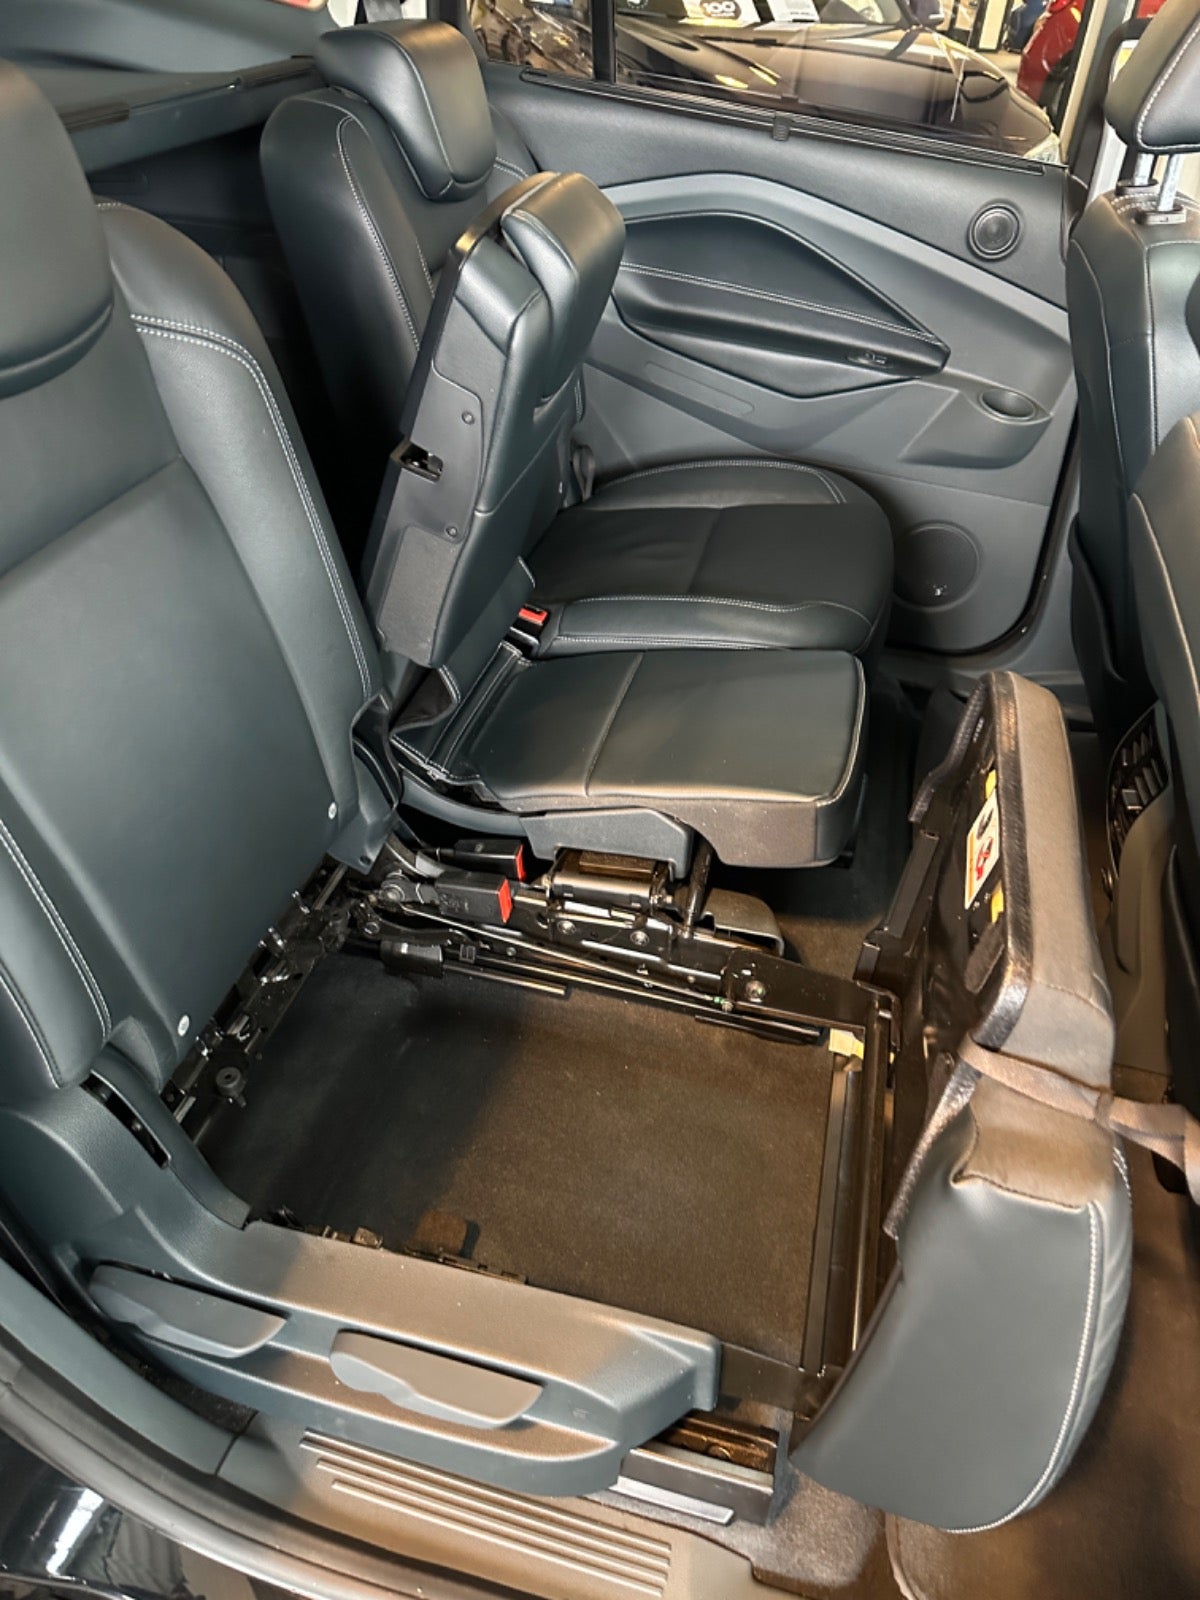 Ford Grand C-MAX 2015